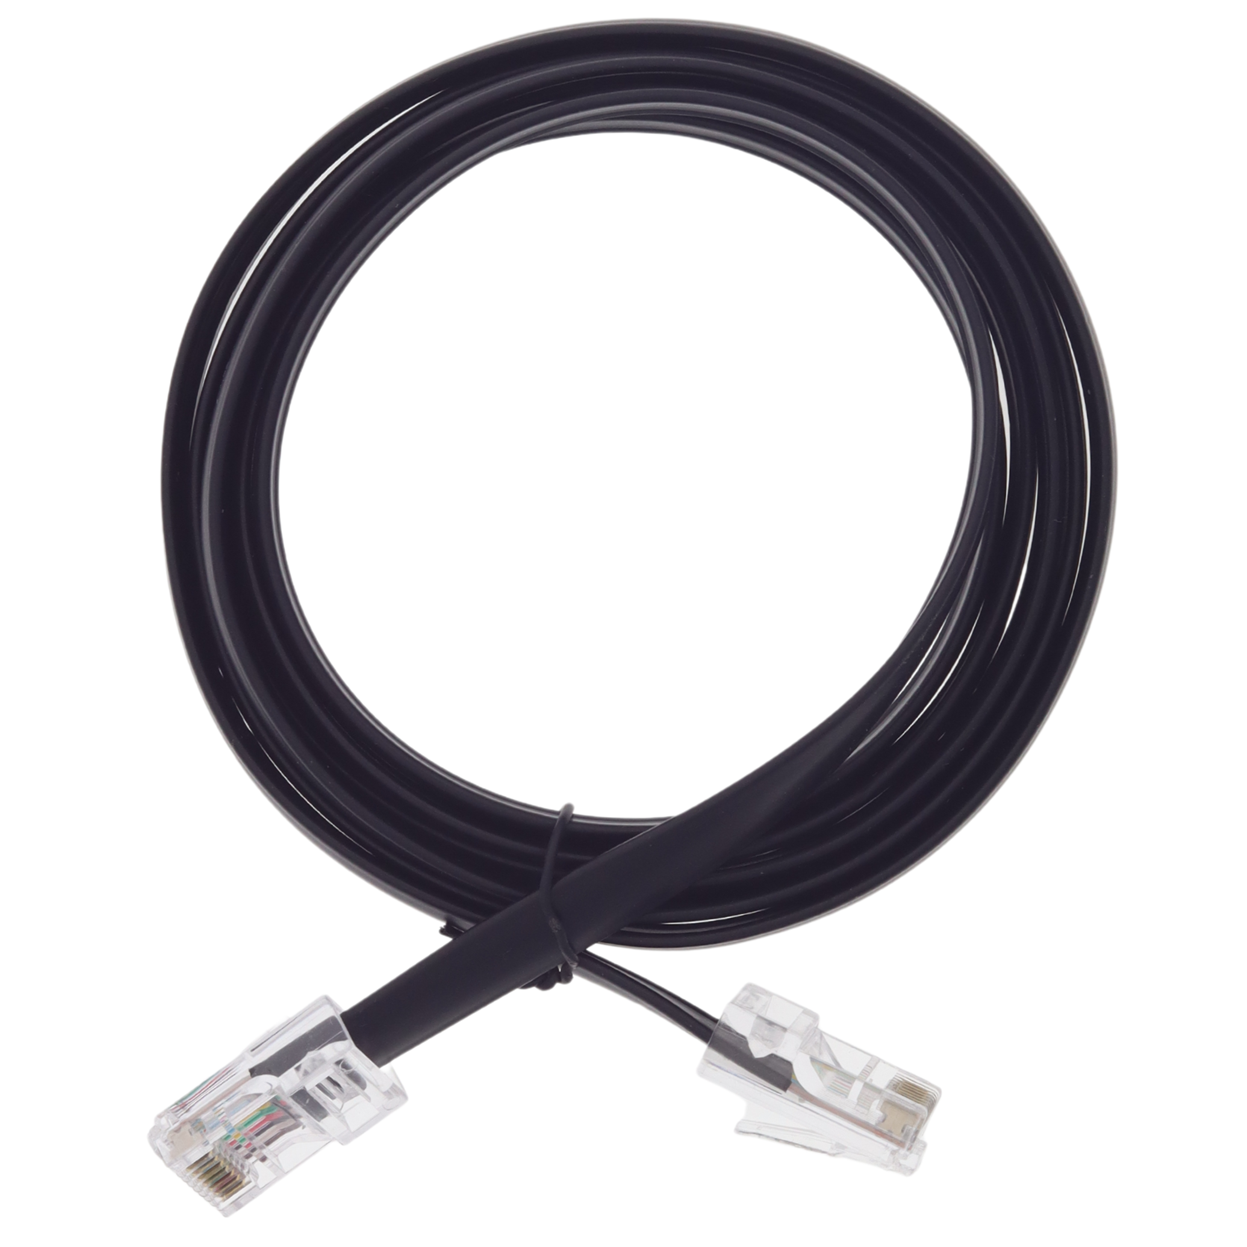 Xtenzi 8Pin Bass Knob 5FT Cable for Hifonics HFR-3 HFR-31 BRUTUS HFI TXI ZRX ZXI